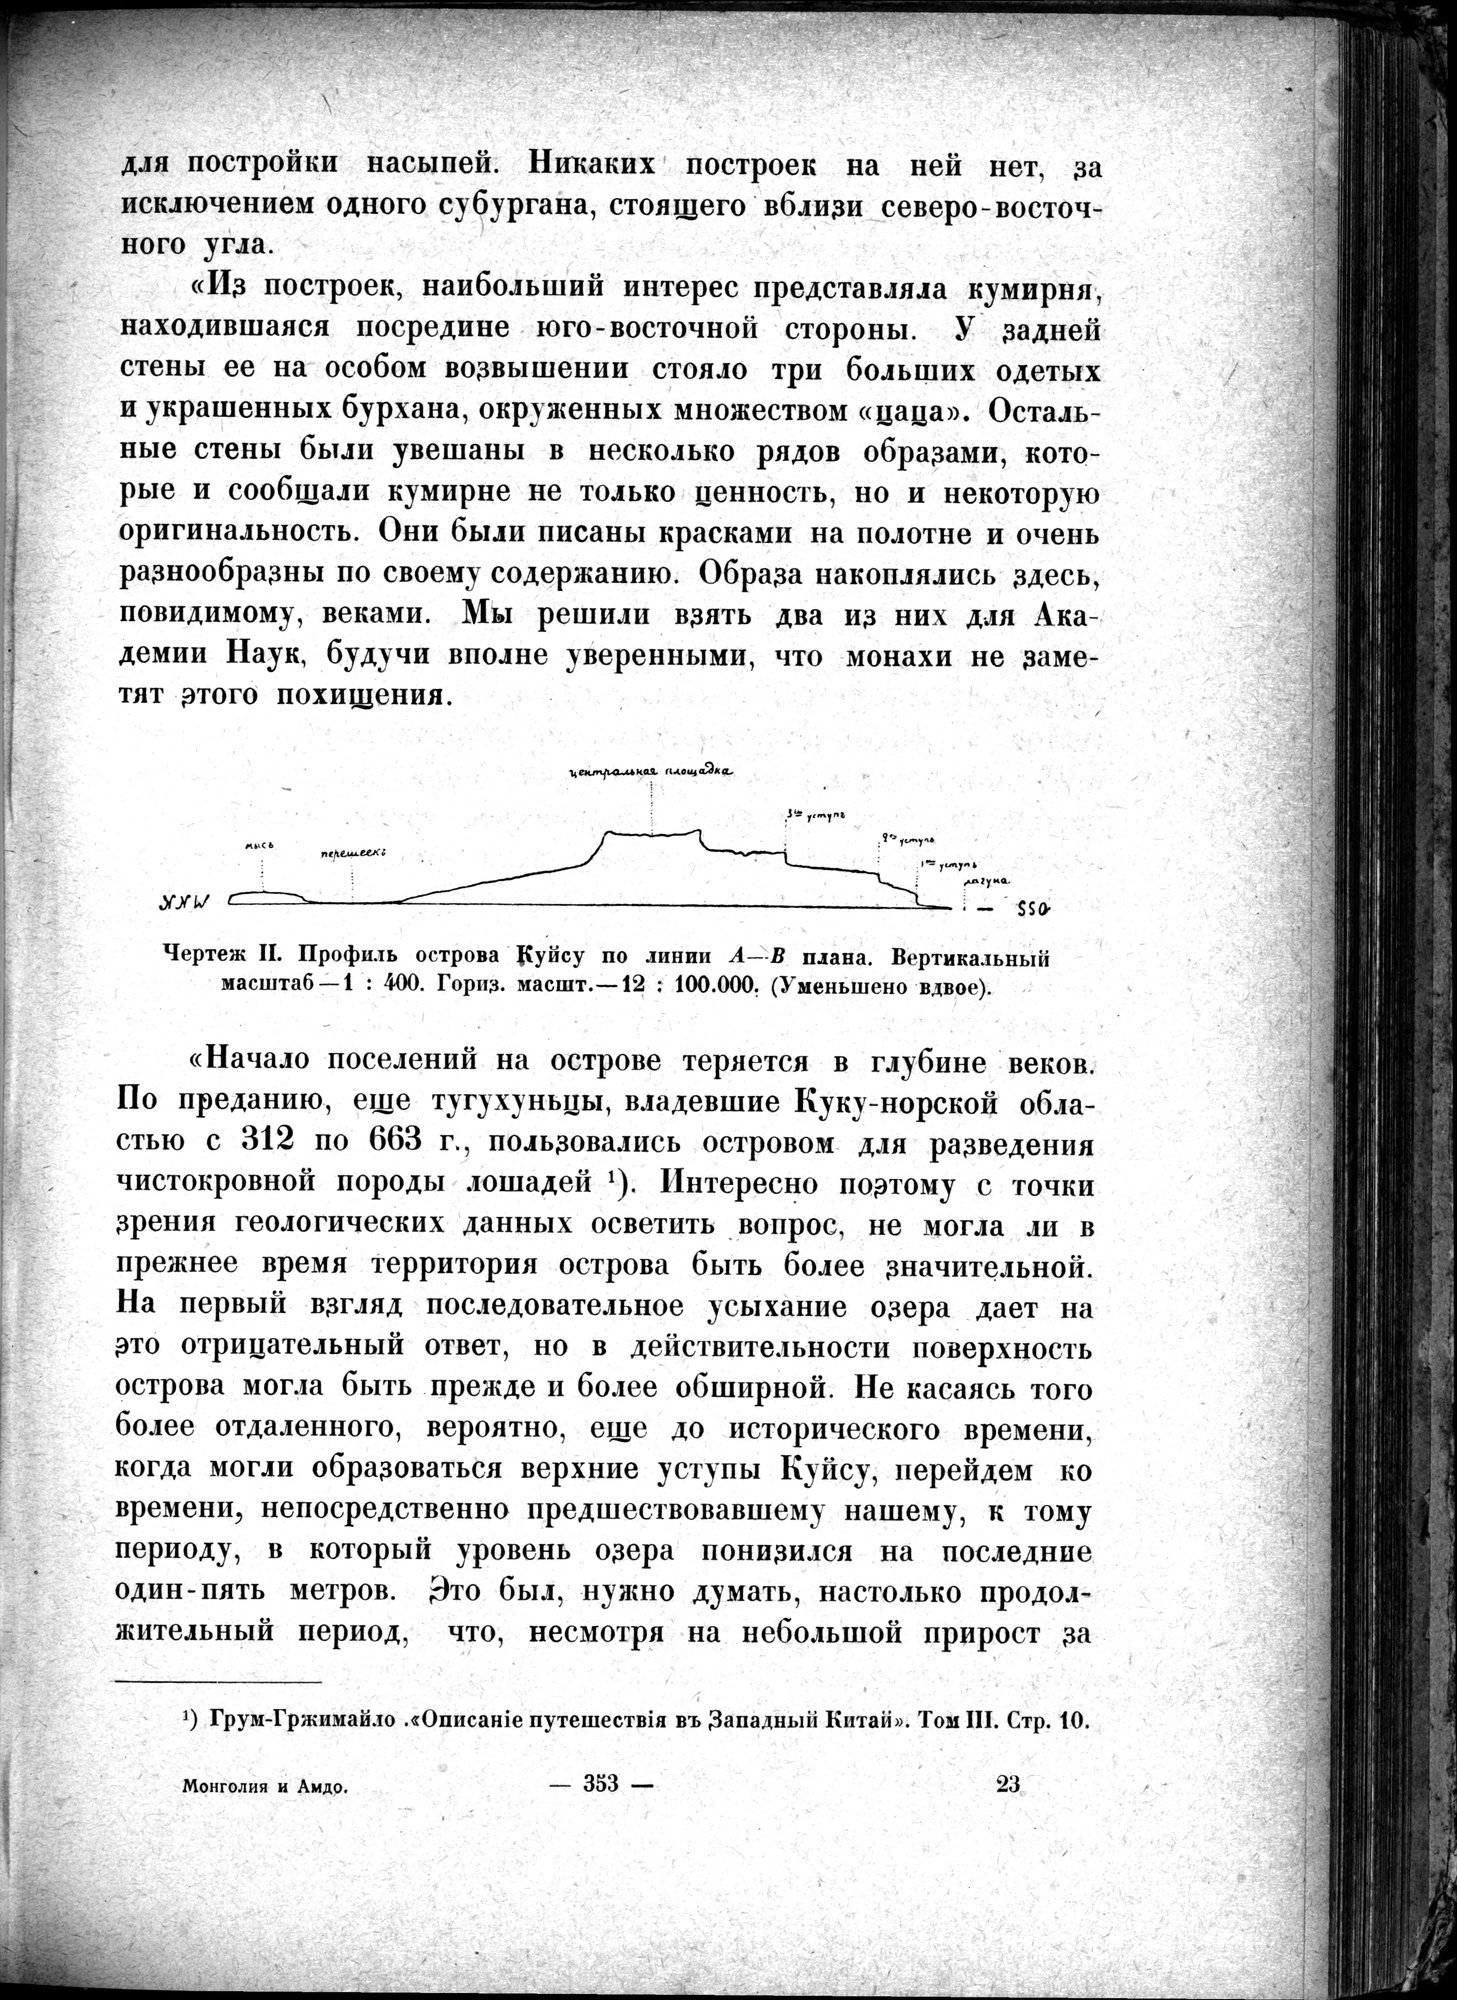 Mongoliya i Amdo i mertby gorod Khara-Khoto : vol.1 / Page 403 (Grayscale High Resolution Image)